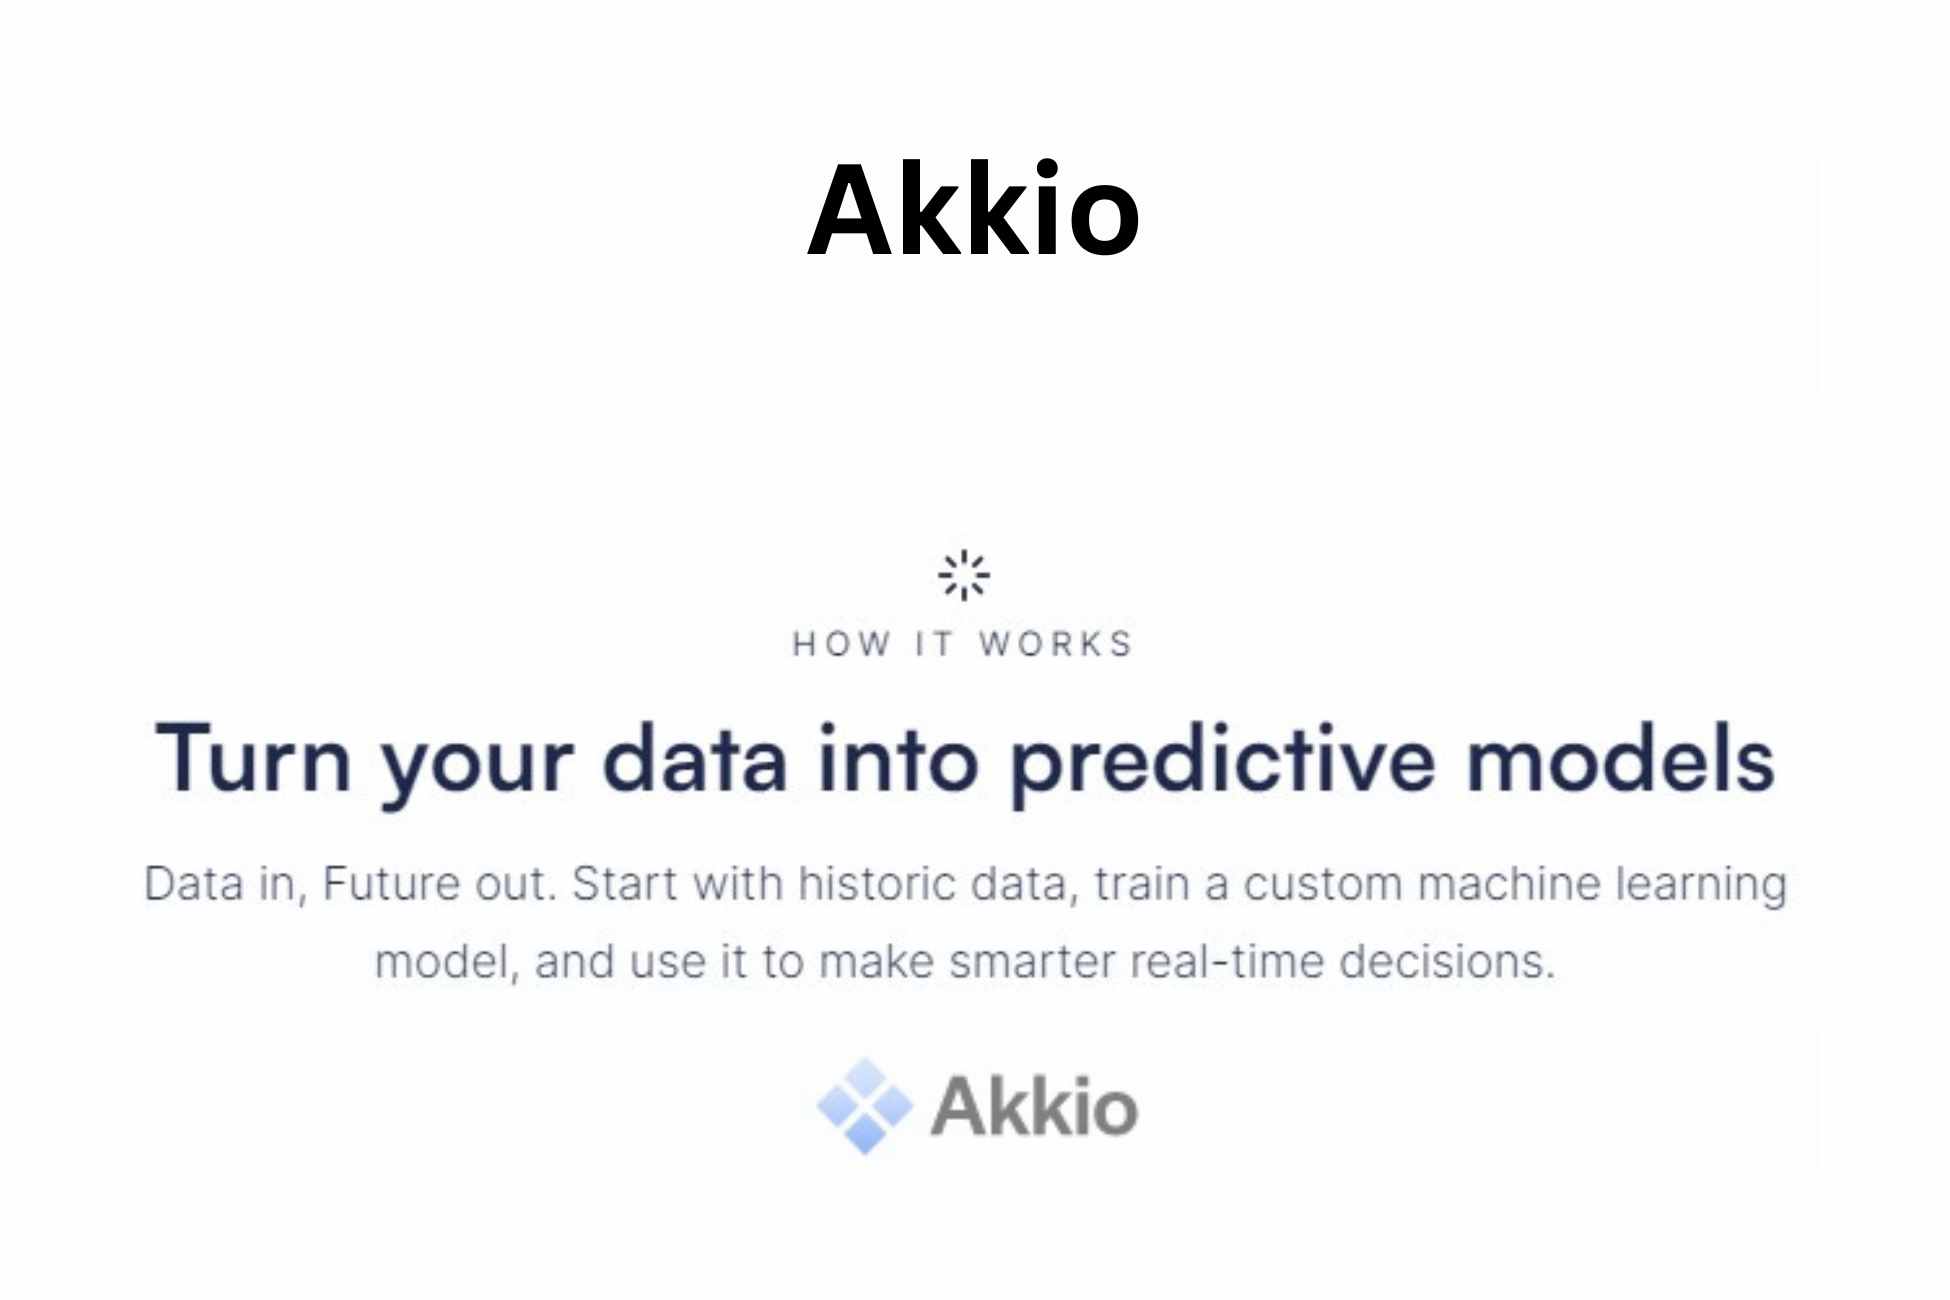 Akkio Predictive Model template